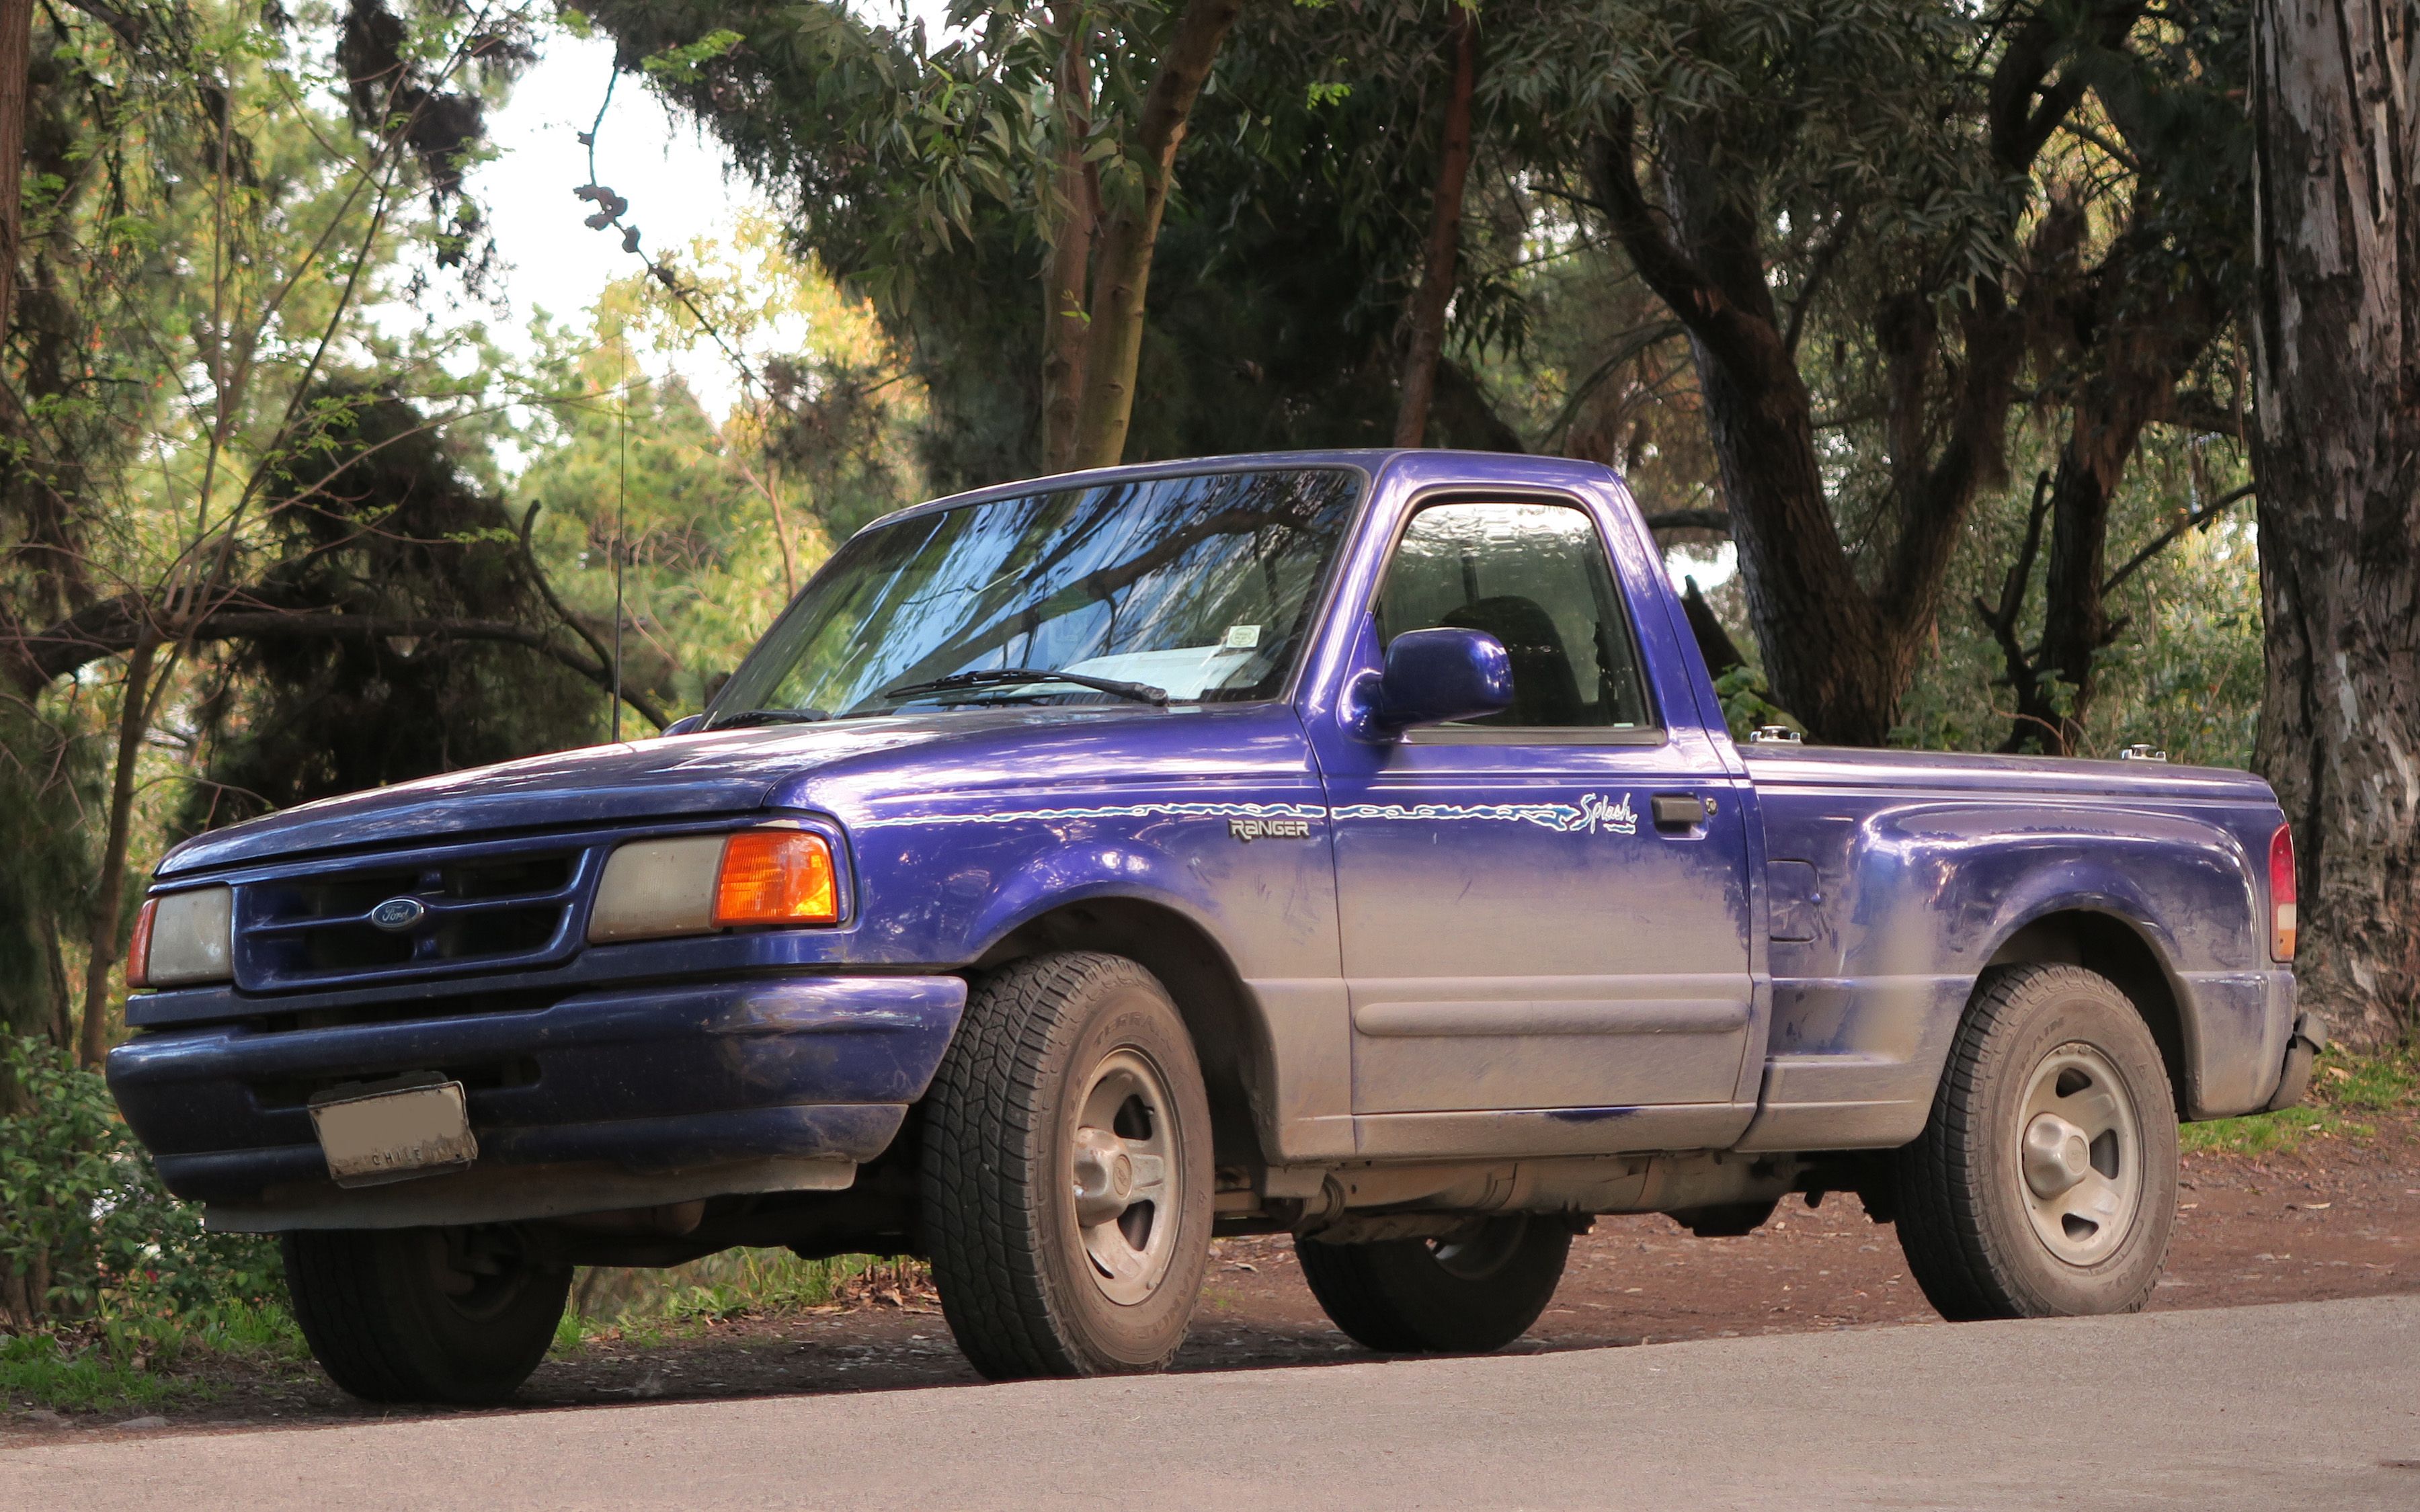 1995:1996 Ford Ranger, purple, dirt track - Wikipedia